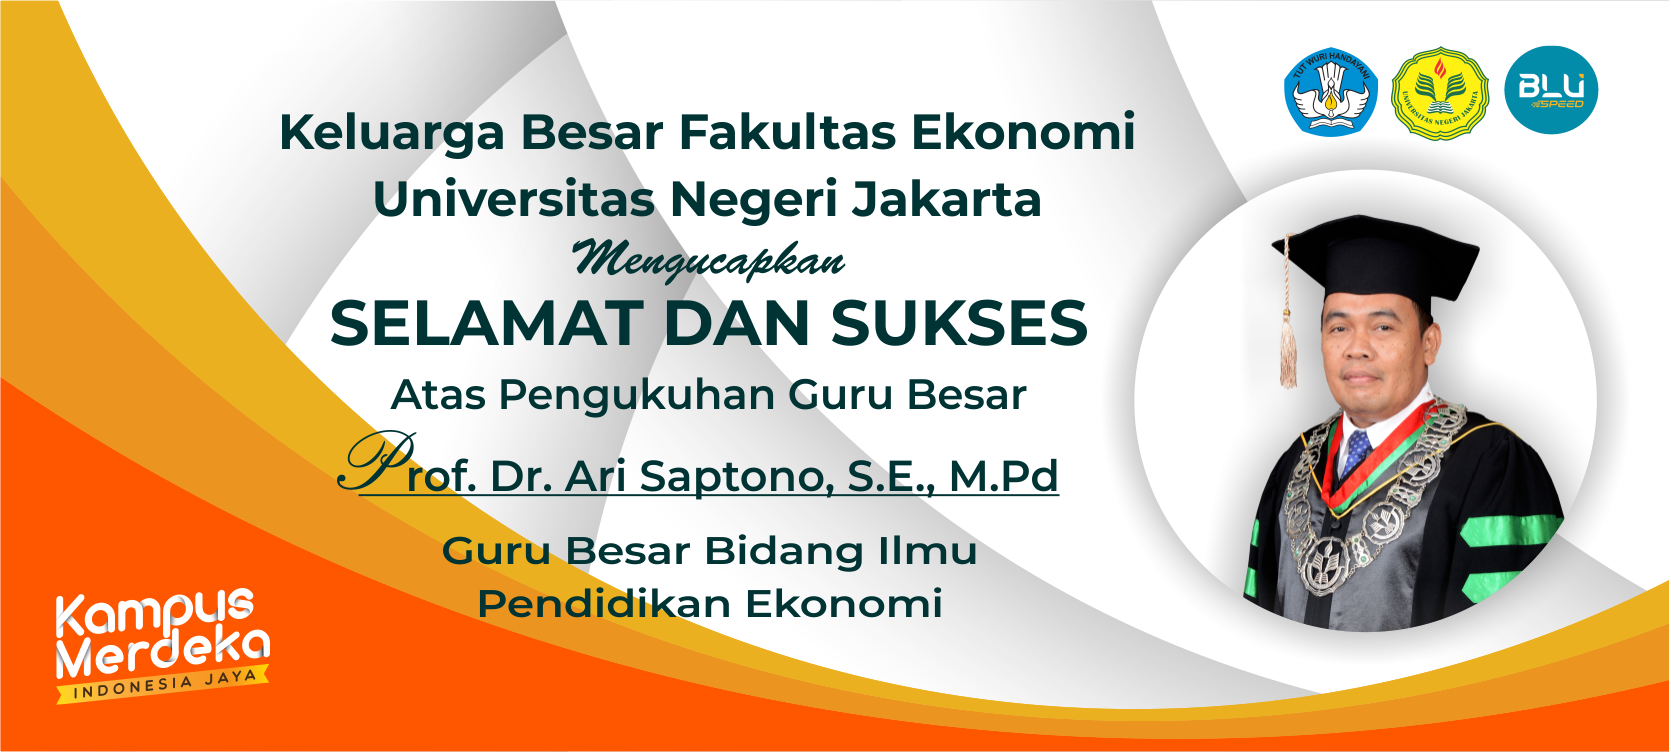 Pengukuhan Guru Besar Prof. Dr. Ari Saptono, S.E., M.Pd